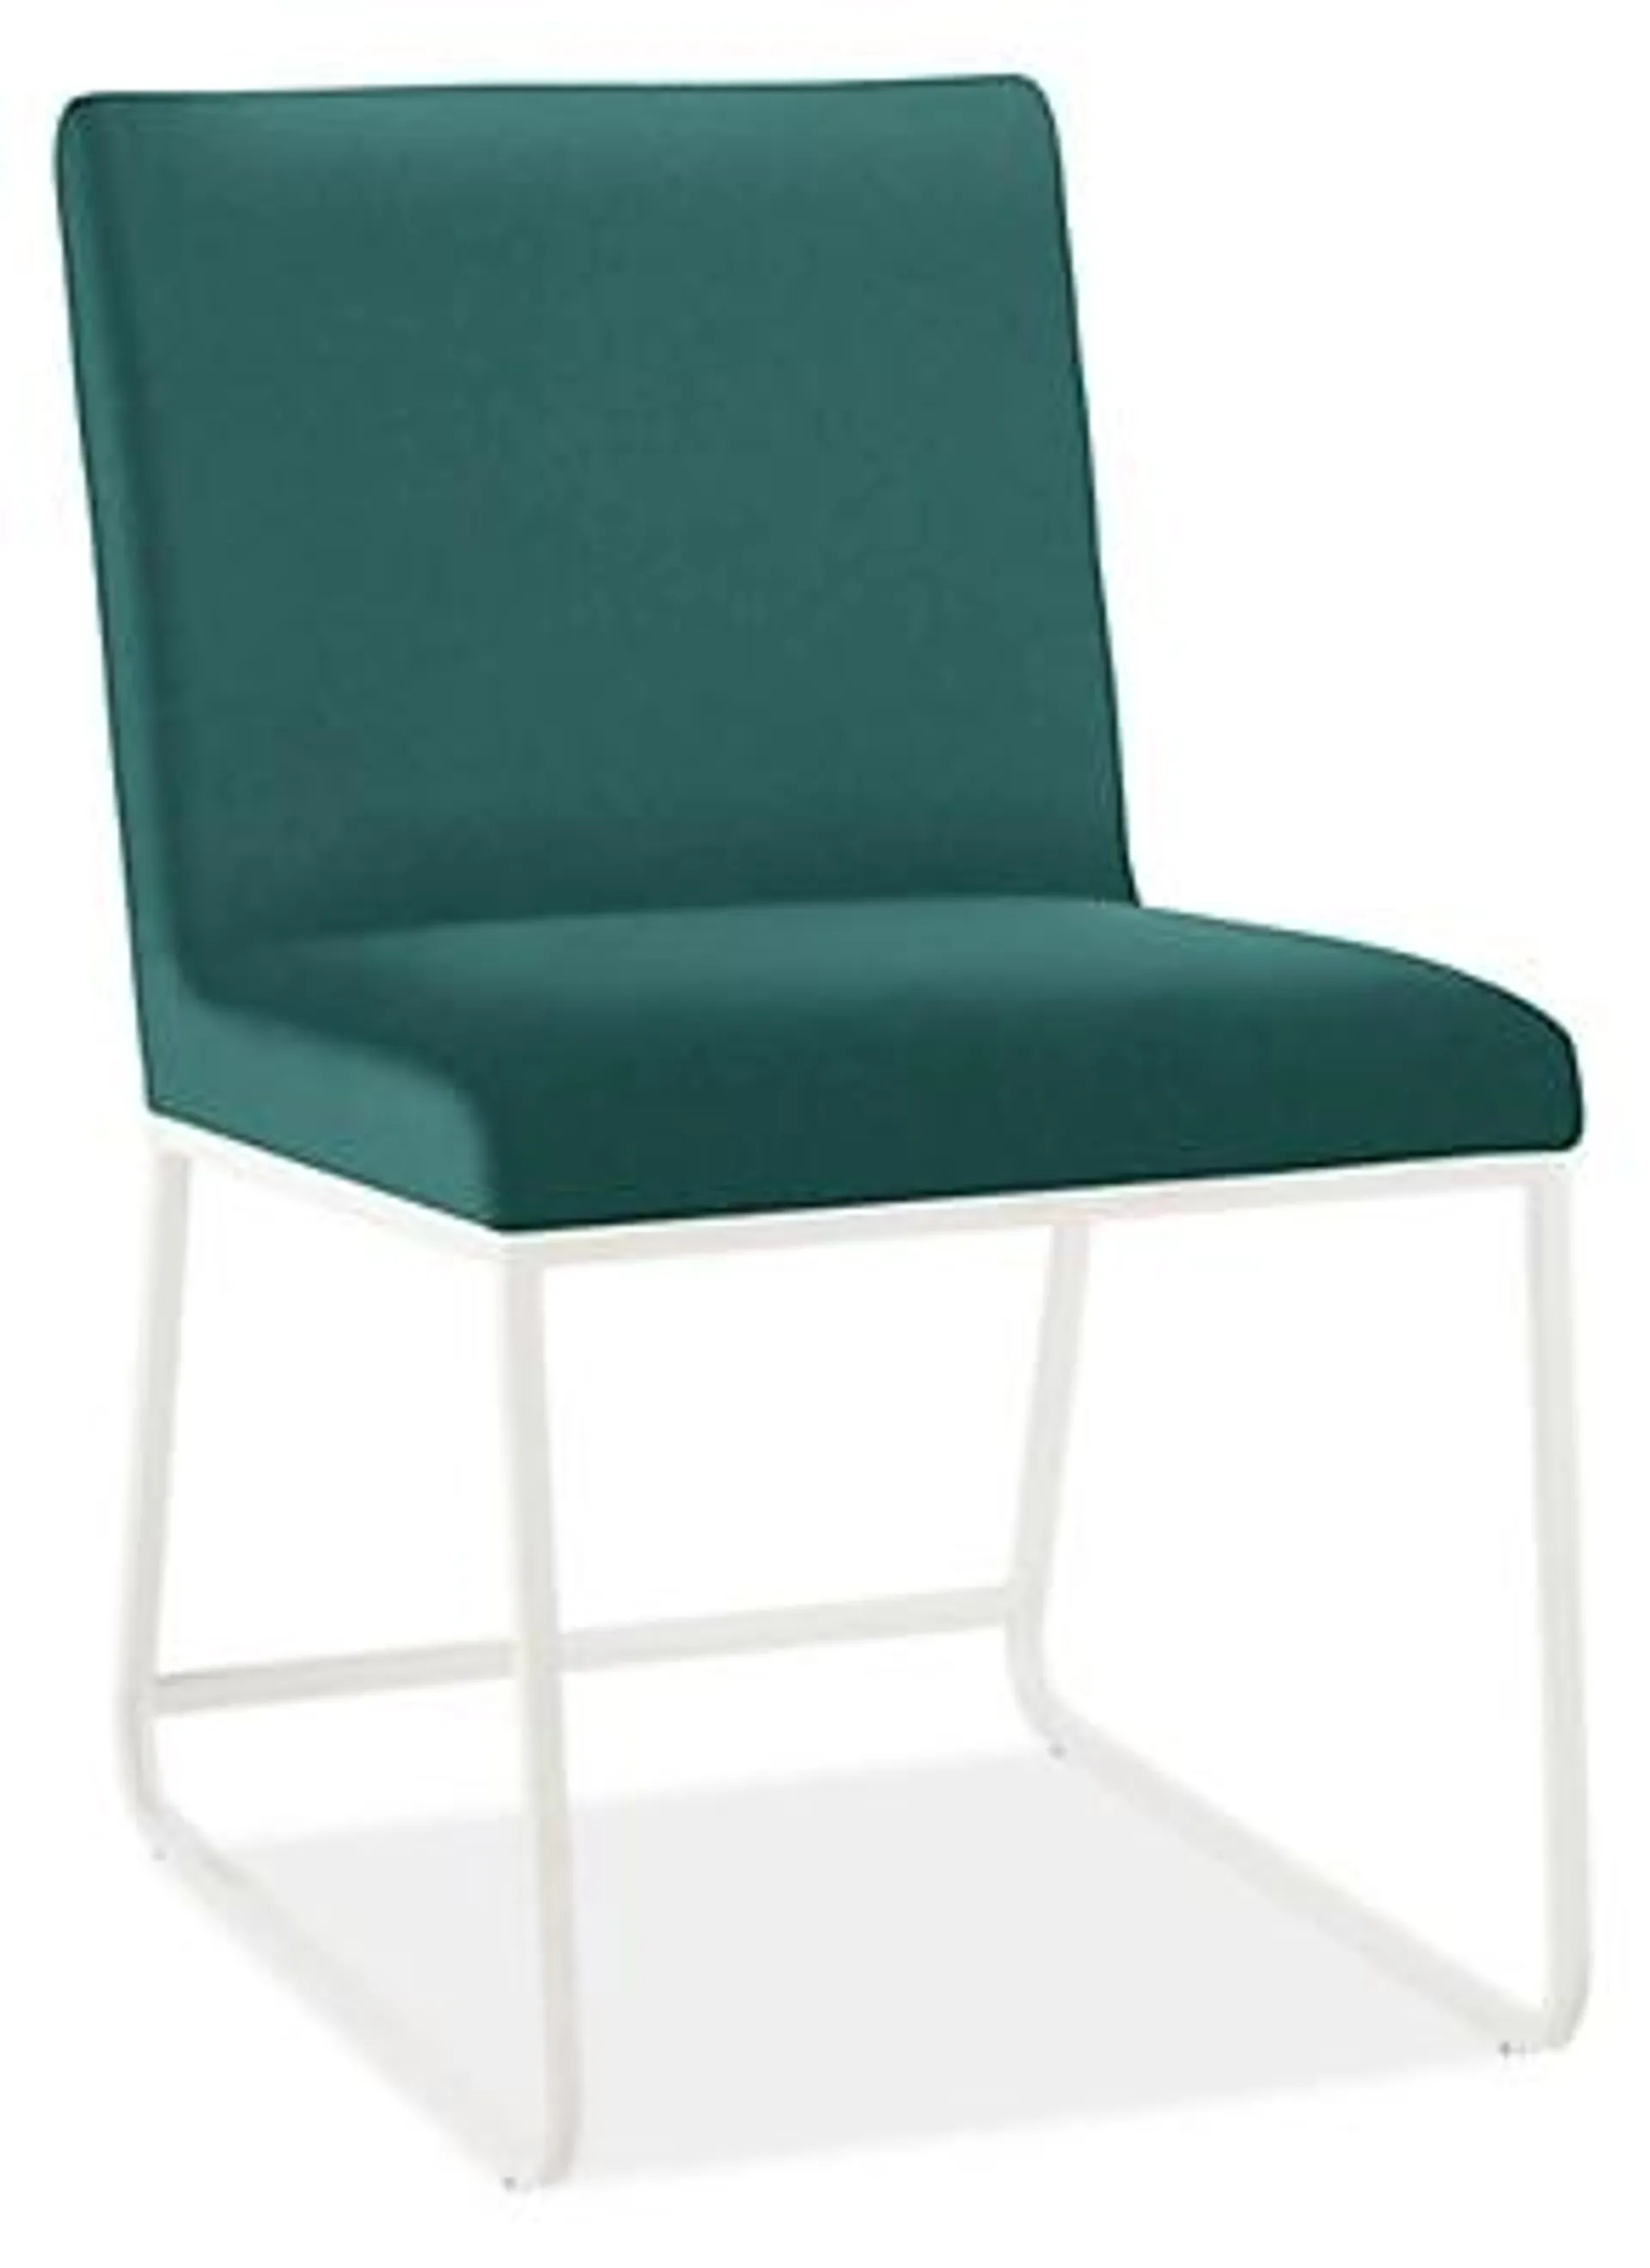 Carmel Dining Chair in Pelham Haze with White Frame